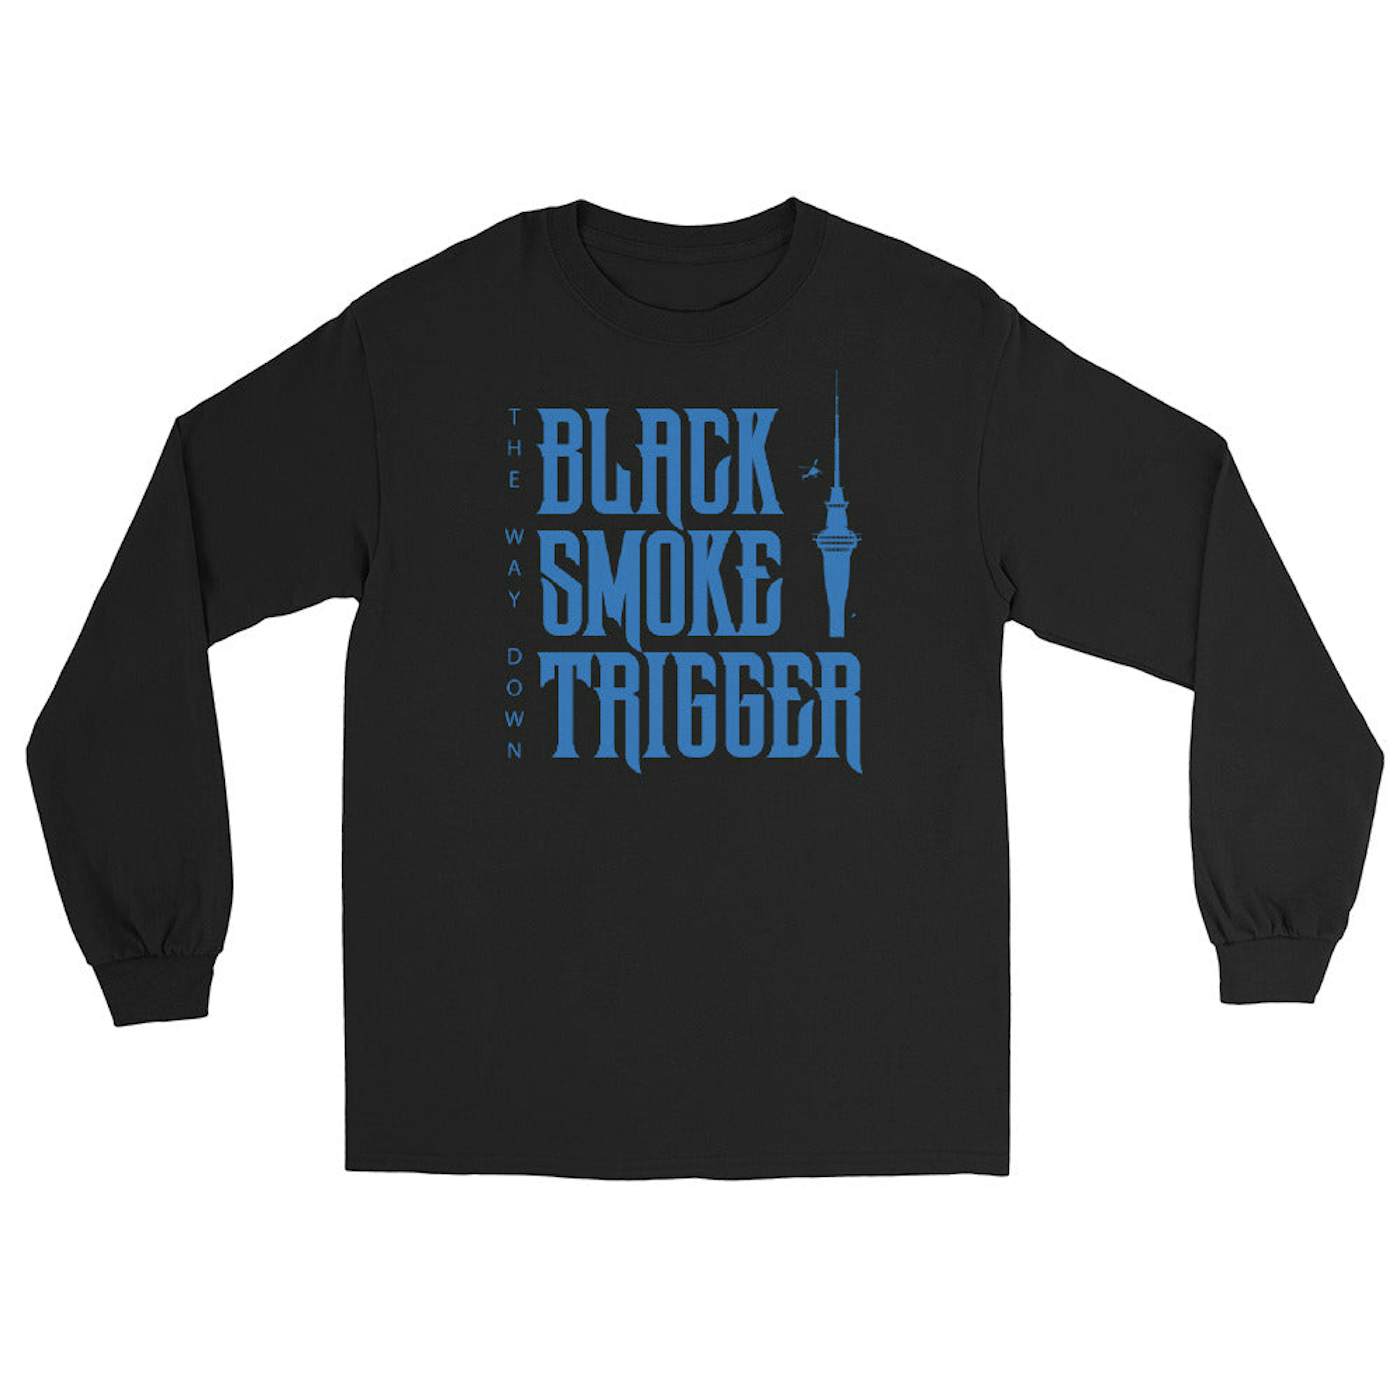 Black Smoke Trigger The Way Down Long-sleeve - Blue